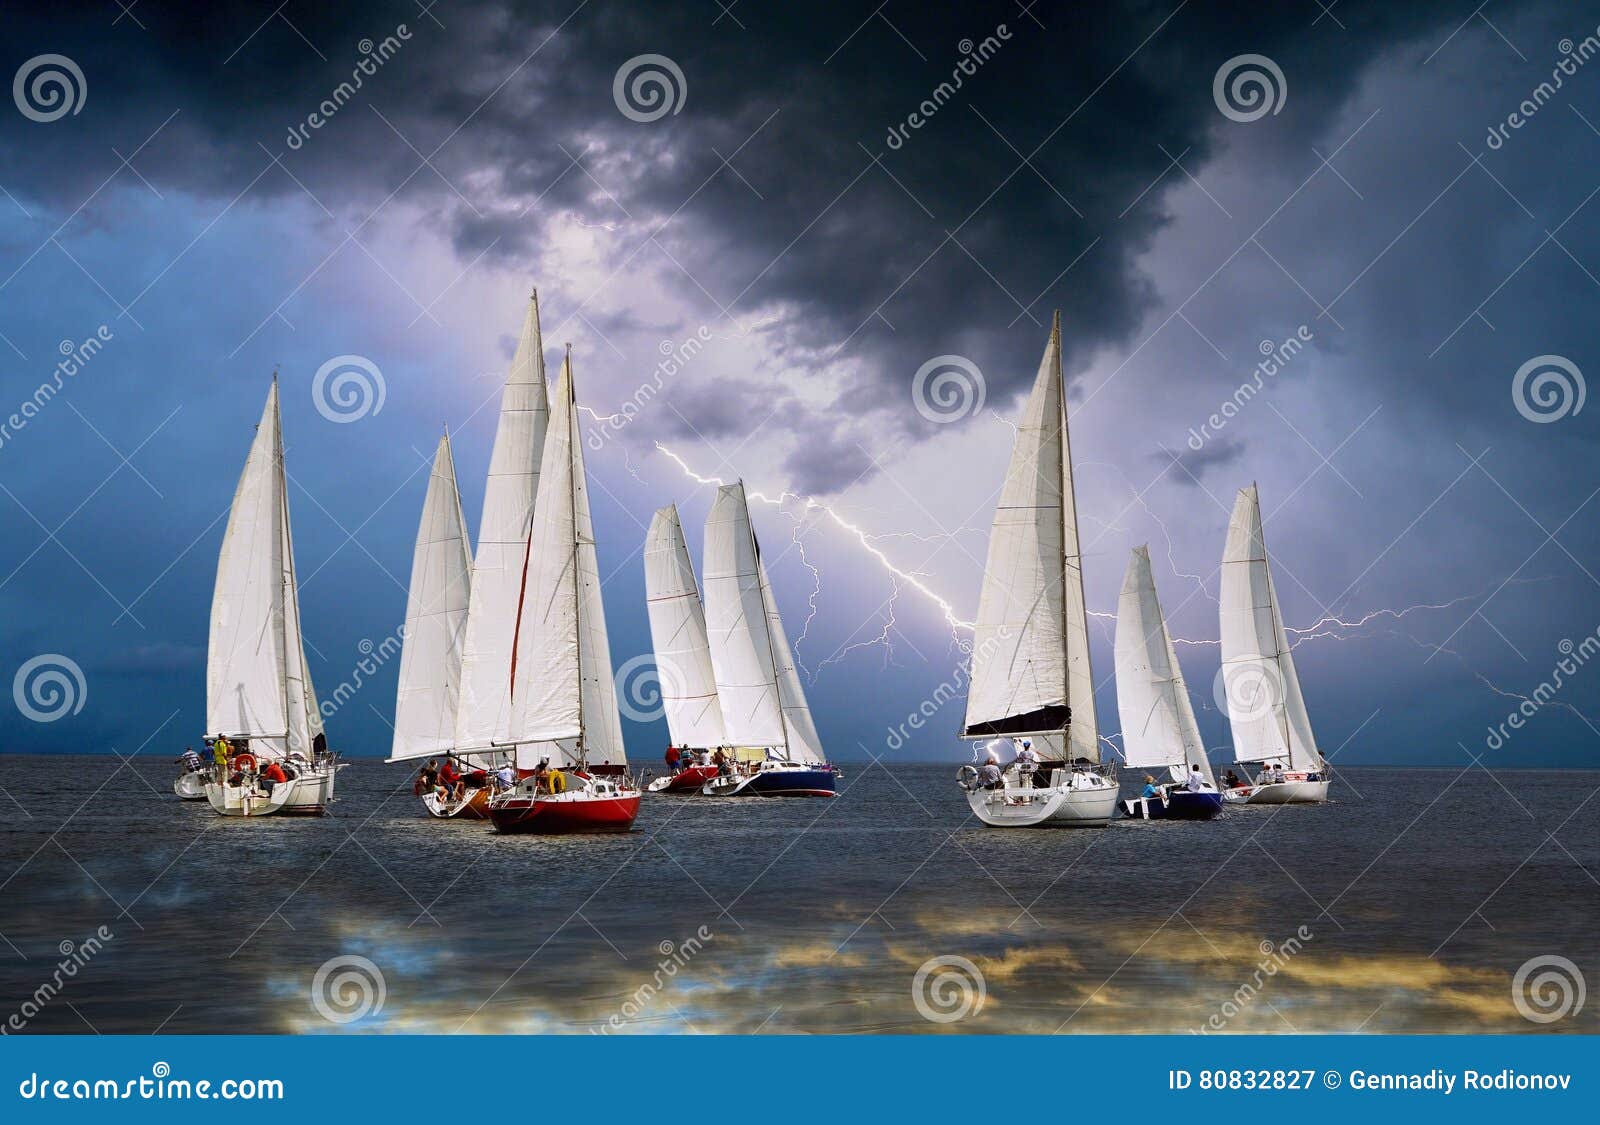 sailboats and lightning